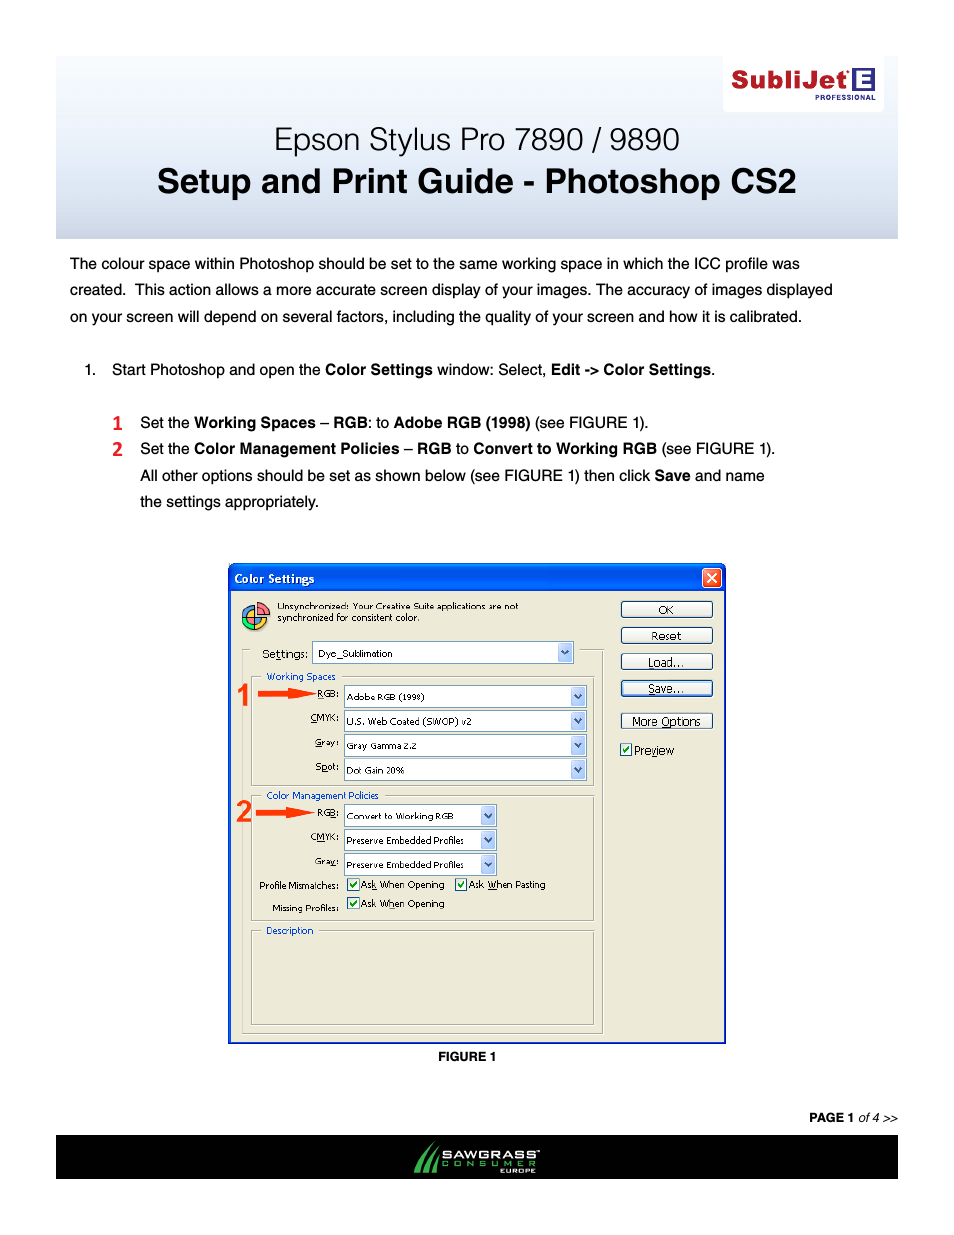 SubliJet E Epson Stylus Pro 7890 (Windows ICC Profile Setup): Print & Setup Guide Photoshop CS2